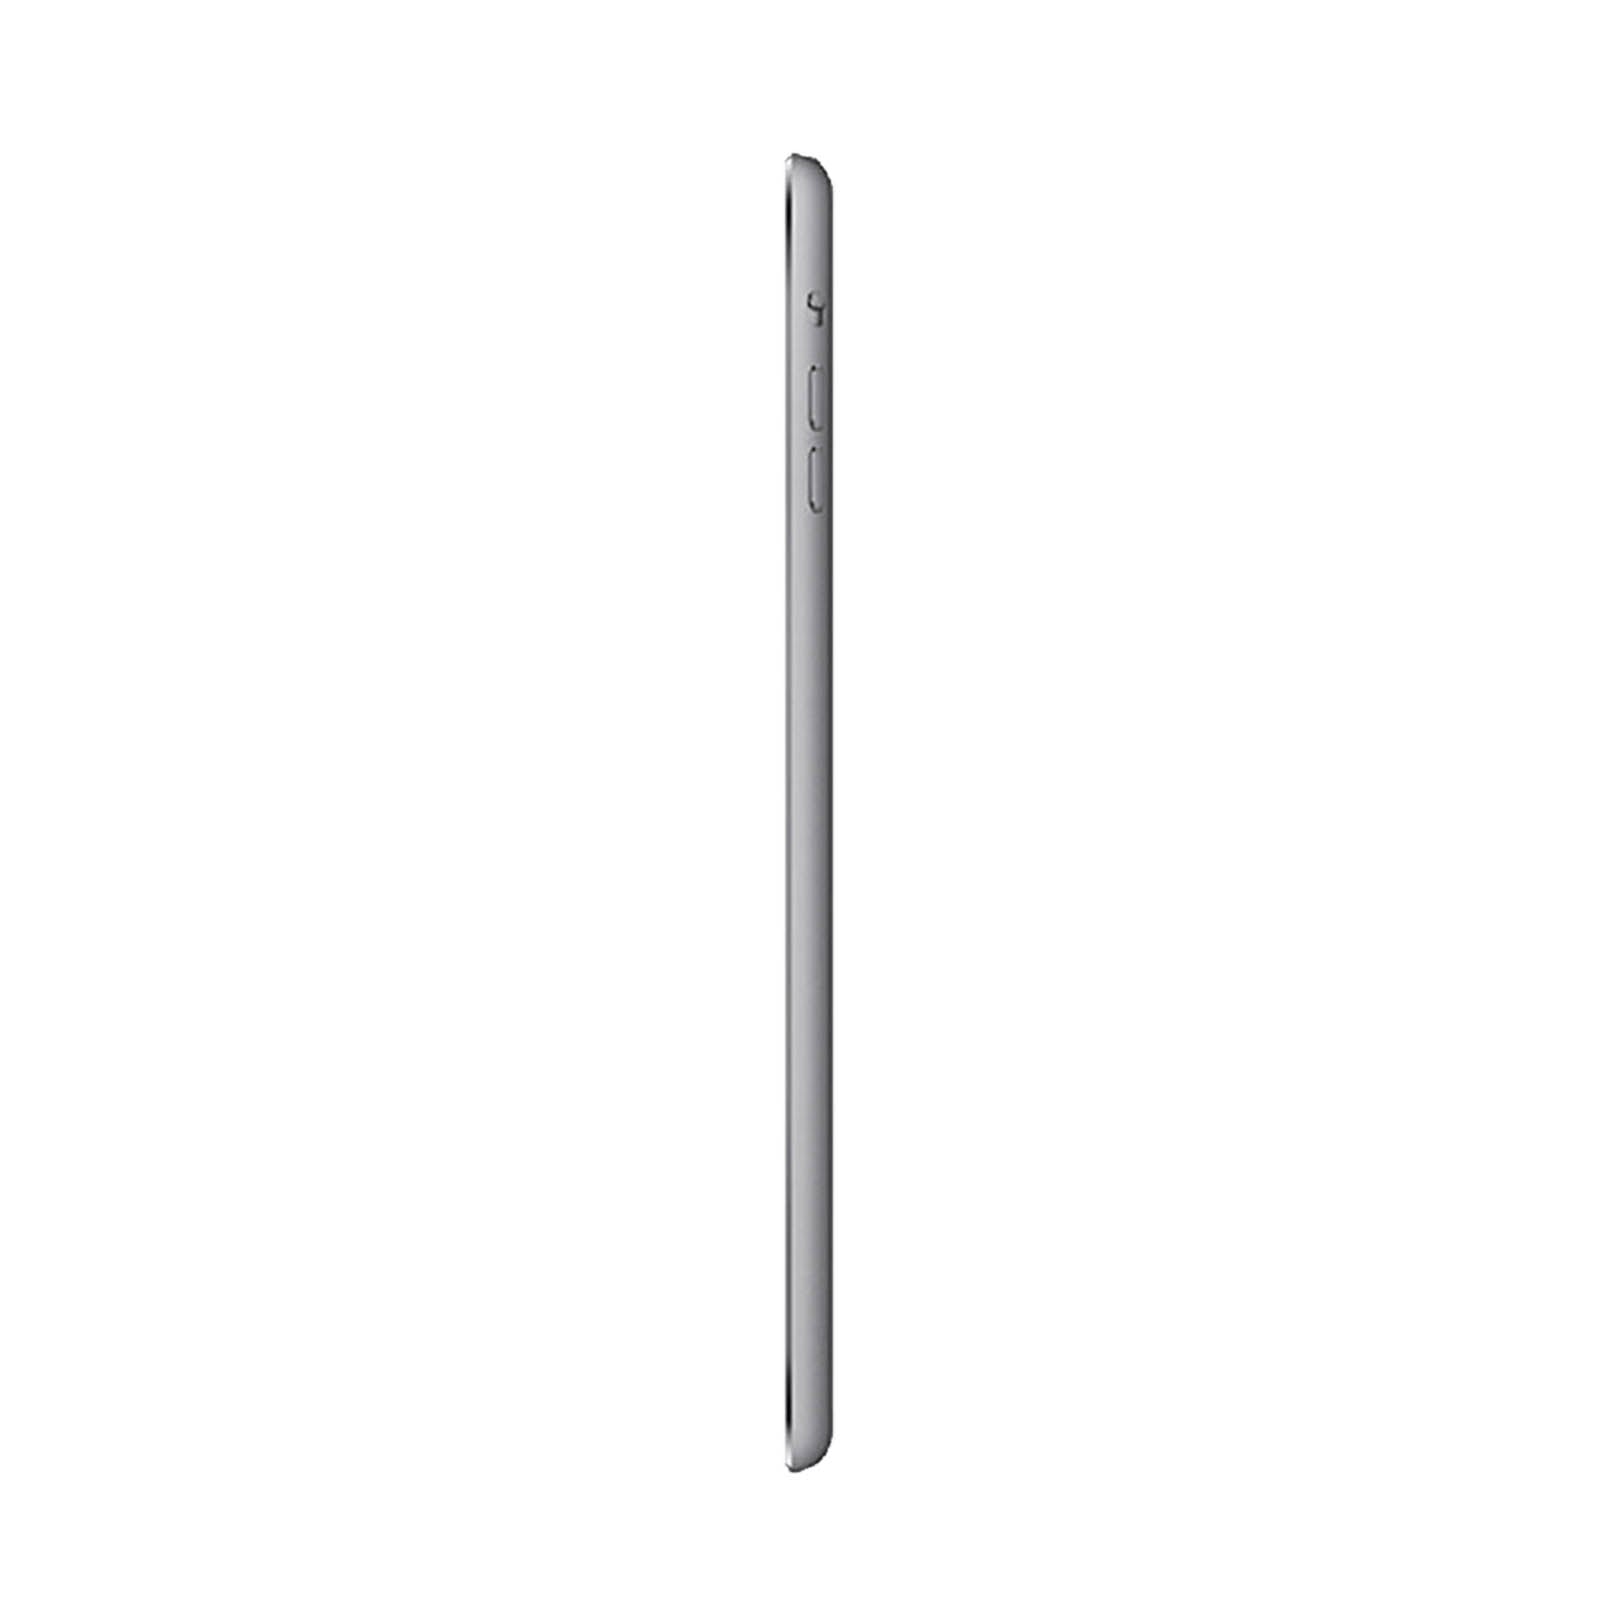 Apple iPad mini 3 16GB Space Grey Good - Unlocked